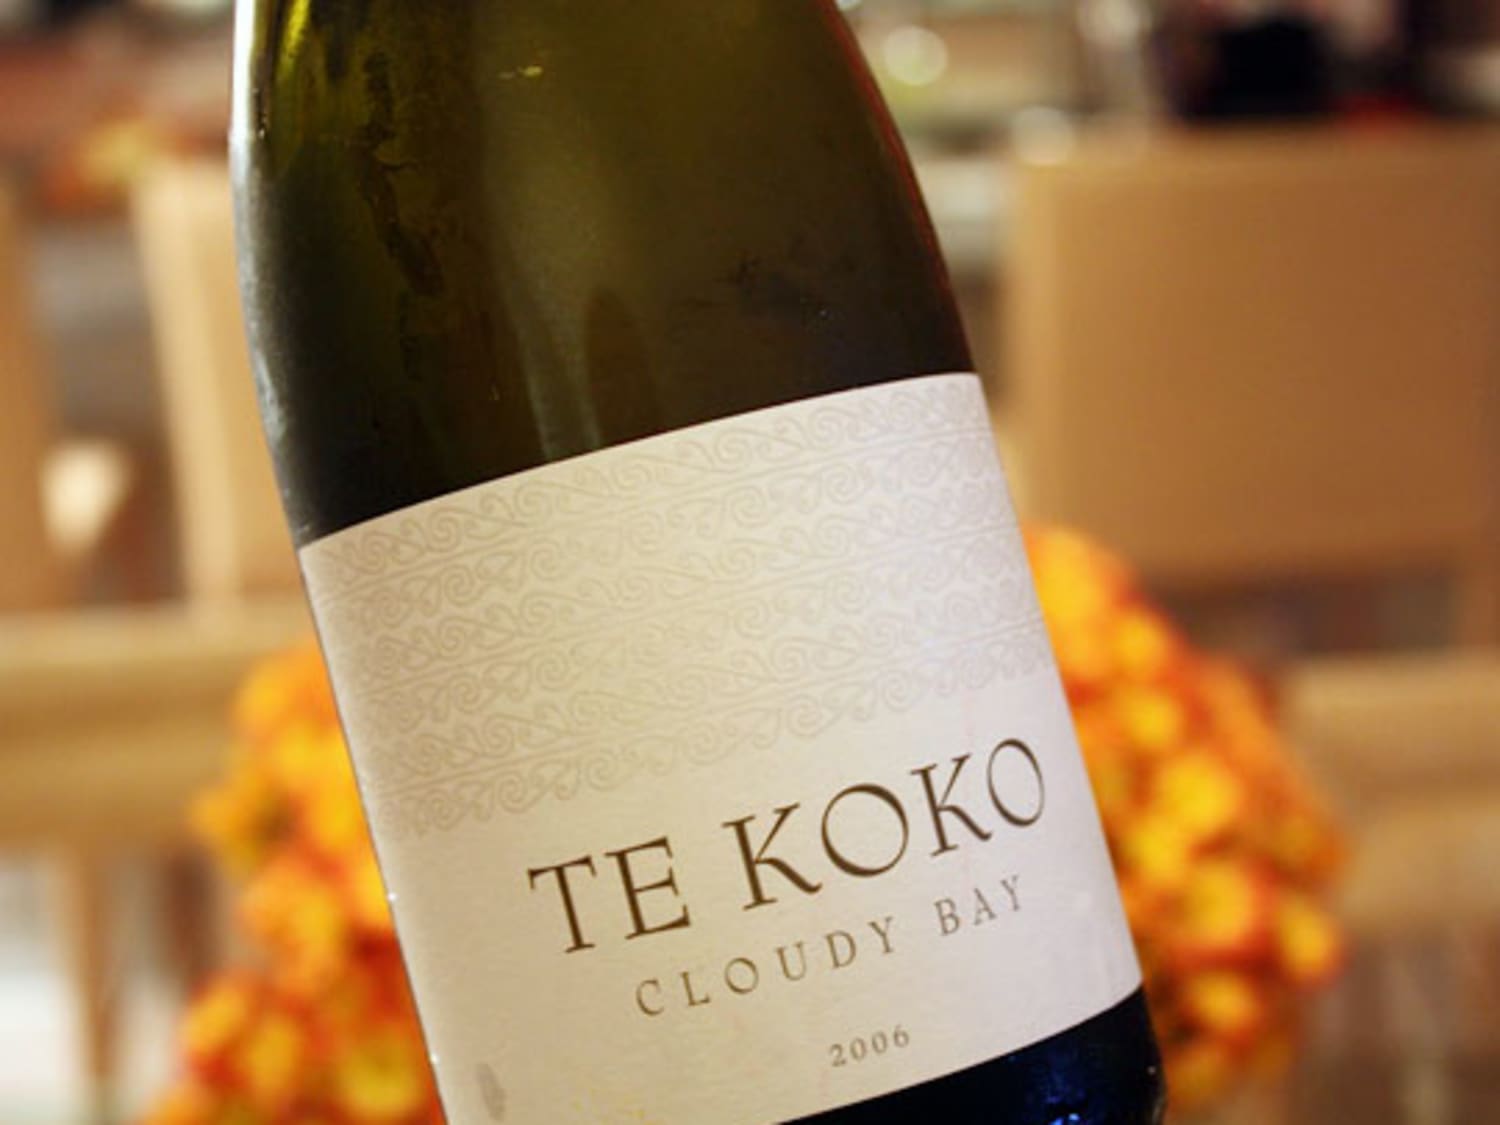 Te Koko Sauvignon Blanc 2014 | Marlborough | Cloudy Bay